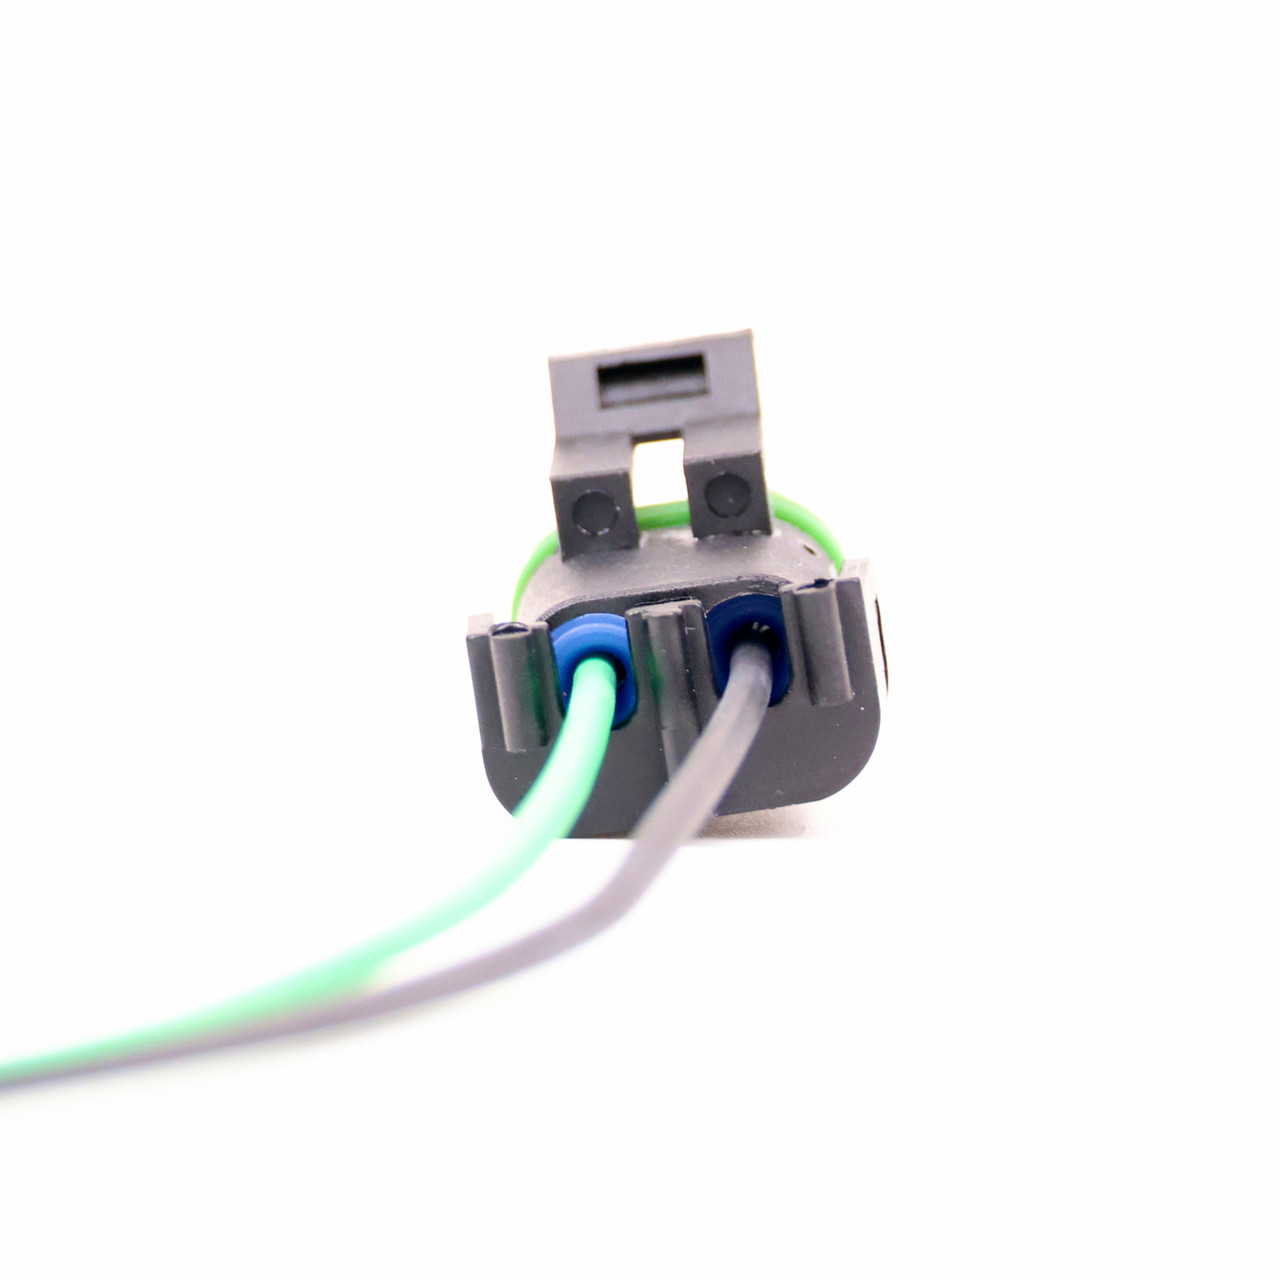 T56 Manual Transmission Wire Harness Connector Pigtail Back Up Reverse Sensor Lamp Light -Fits GM LS1 LT1